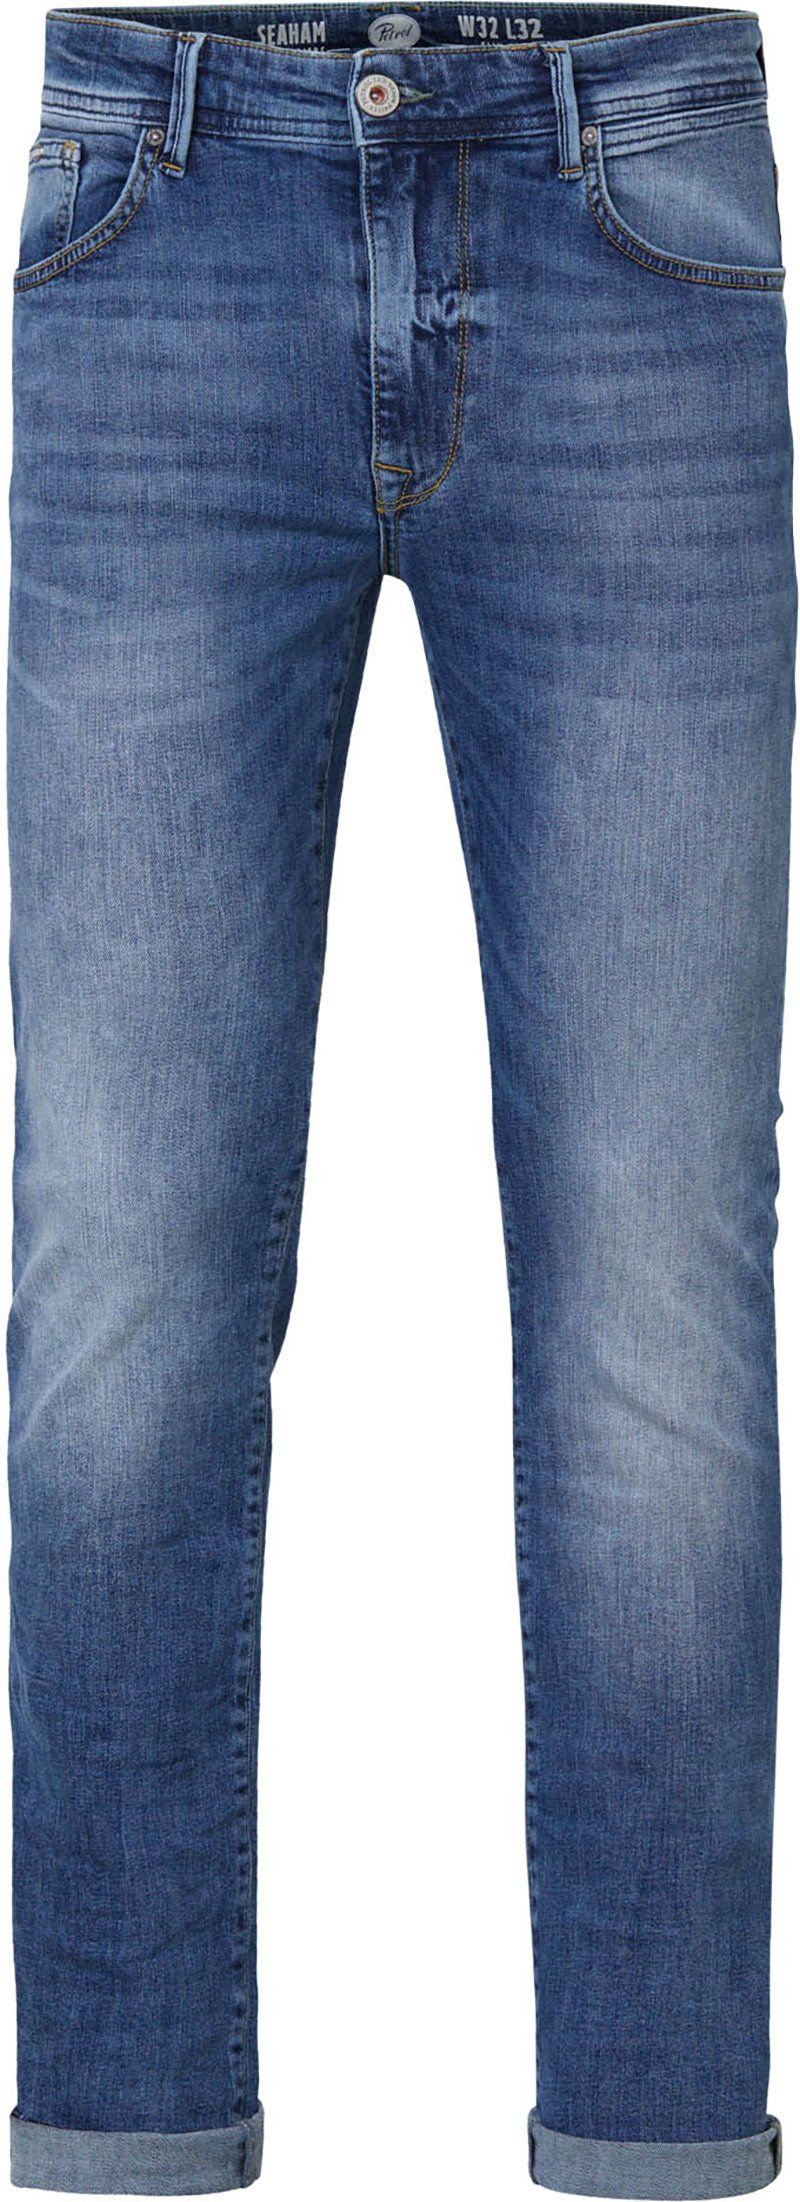 Petrol Seaham Jeans Indigo Blue - Größe W 38 - L 34 von Petrol